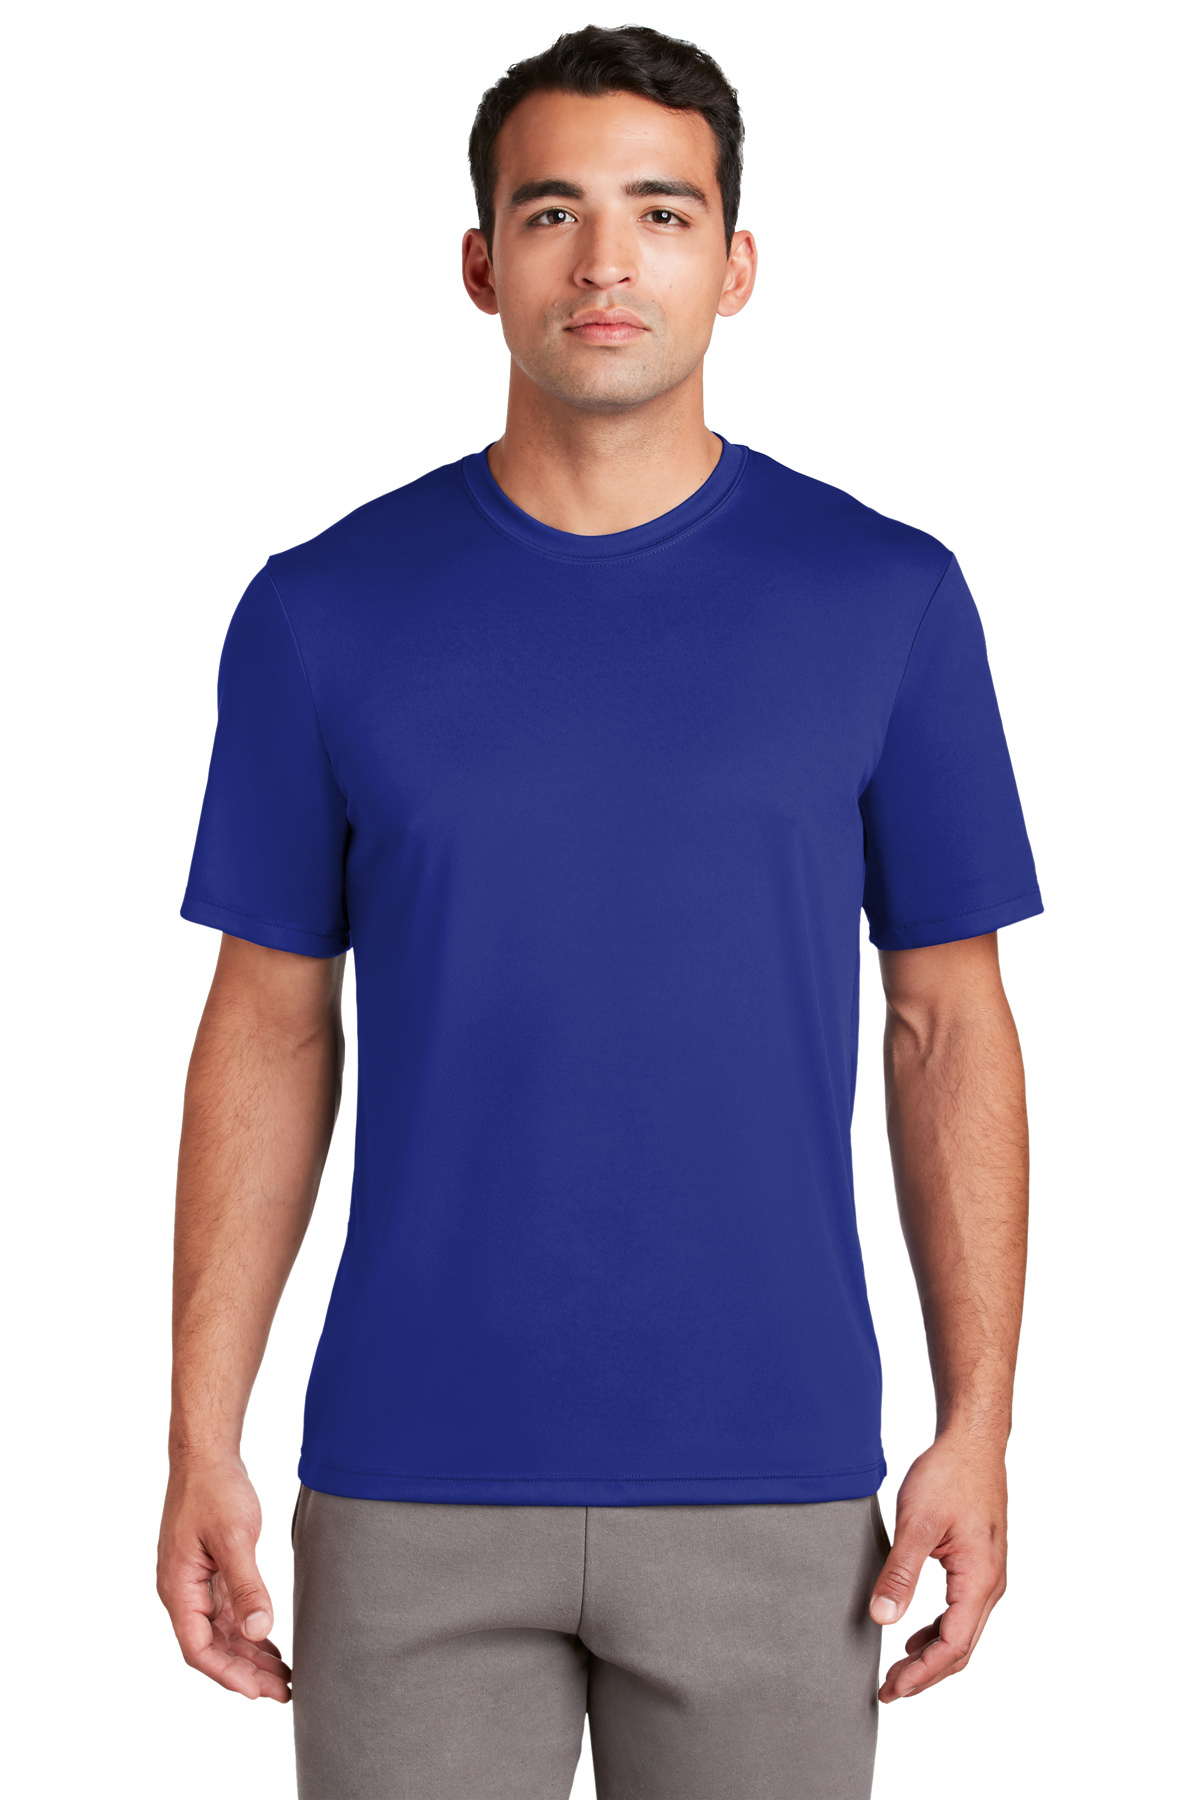 Hanes Cool Dri Performance T-Shirt | Product | Company Casuals